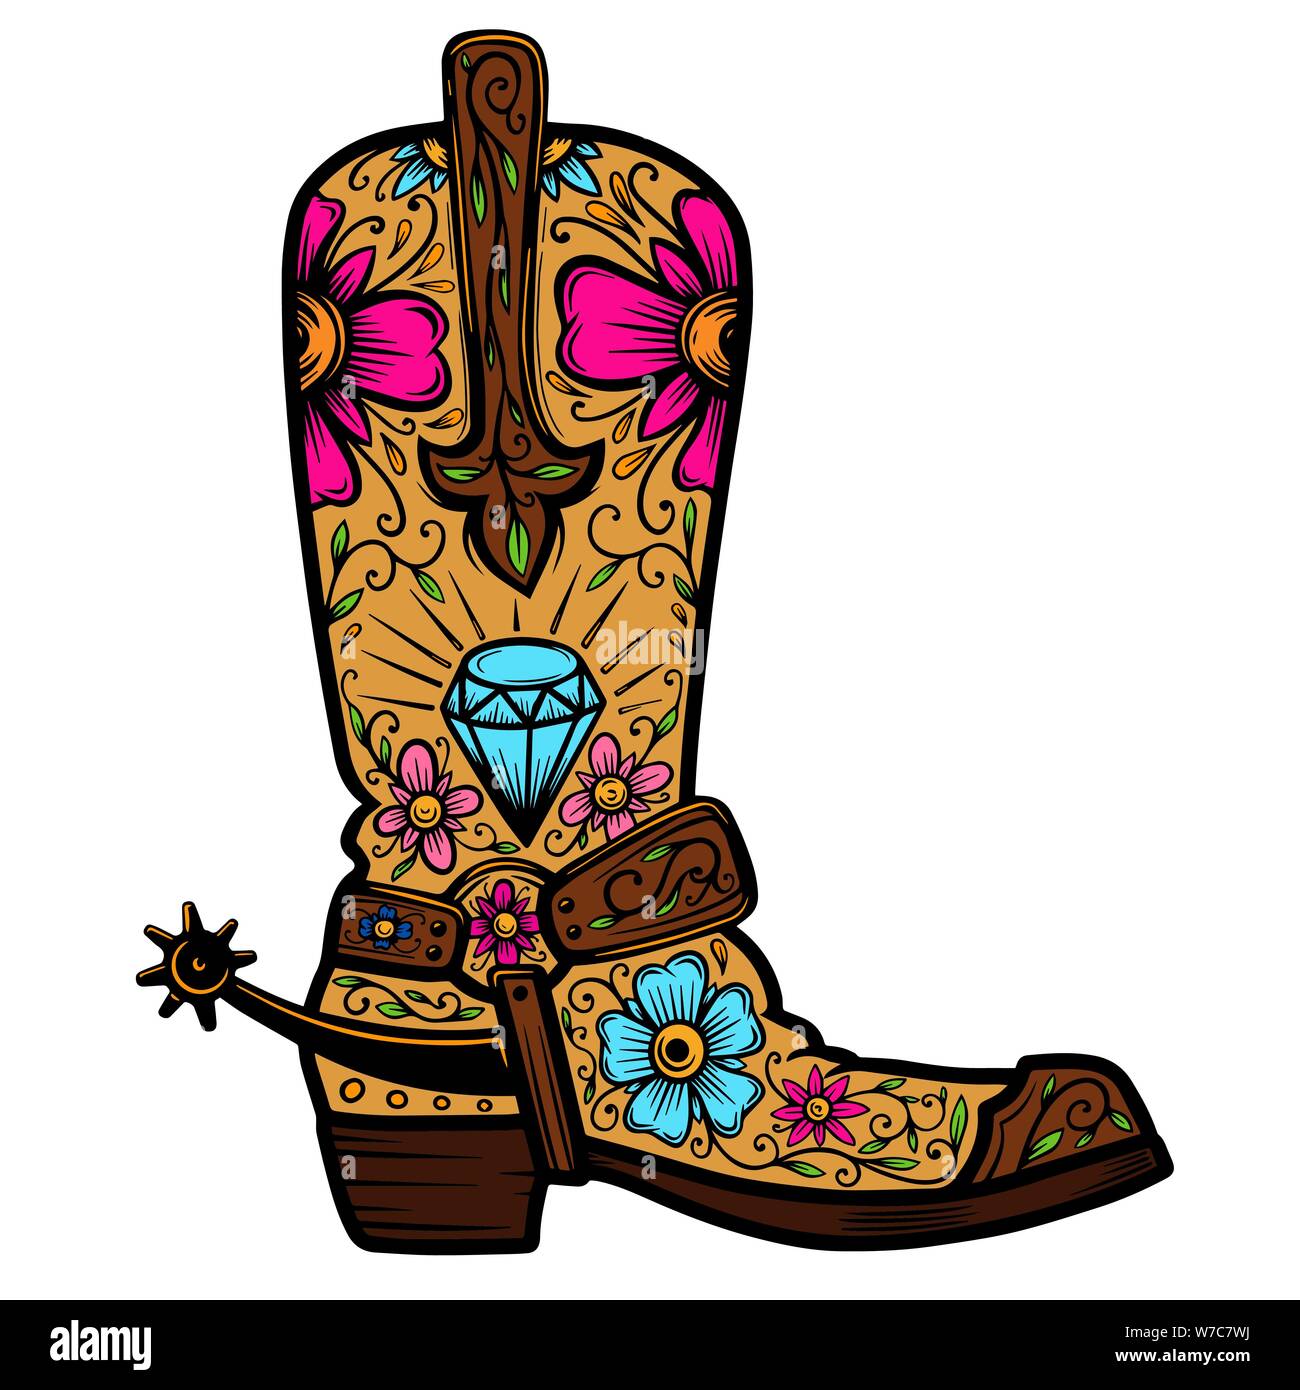 Cowboy-stiefel mit floralen Muster. Design Element für Poster, t-shirt, Emblem, sign. Stock Vektor